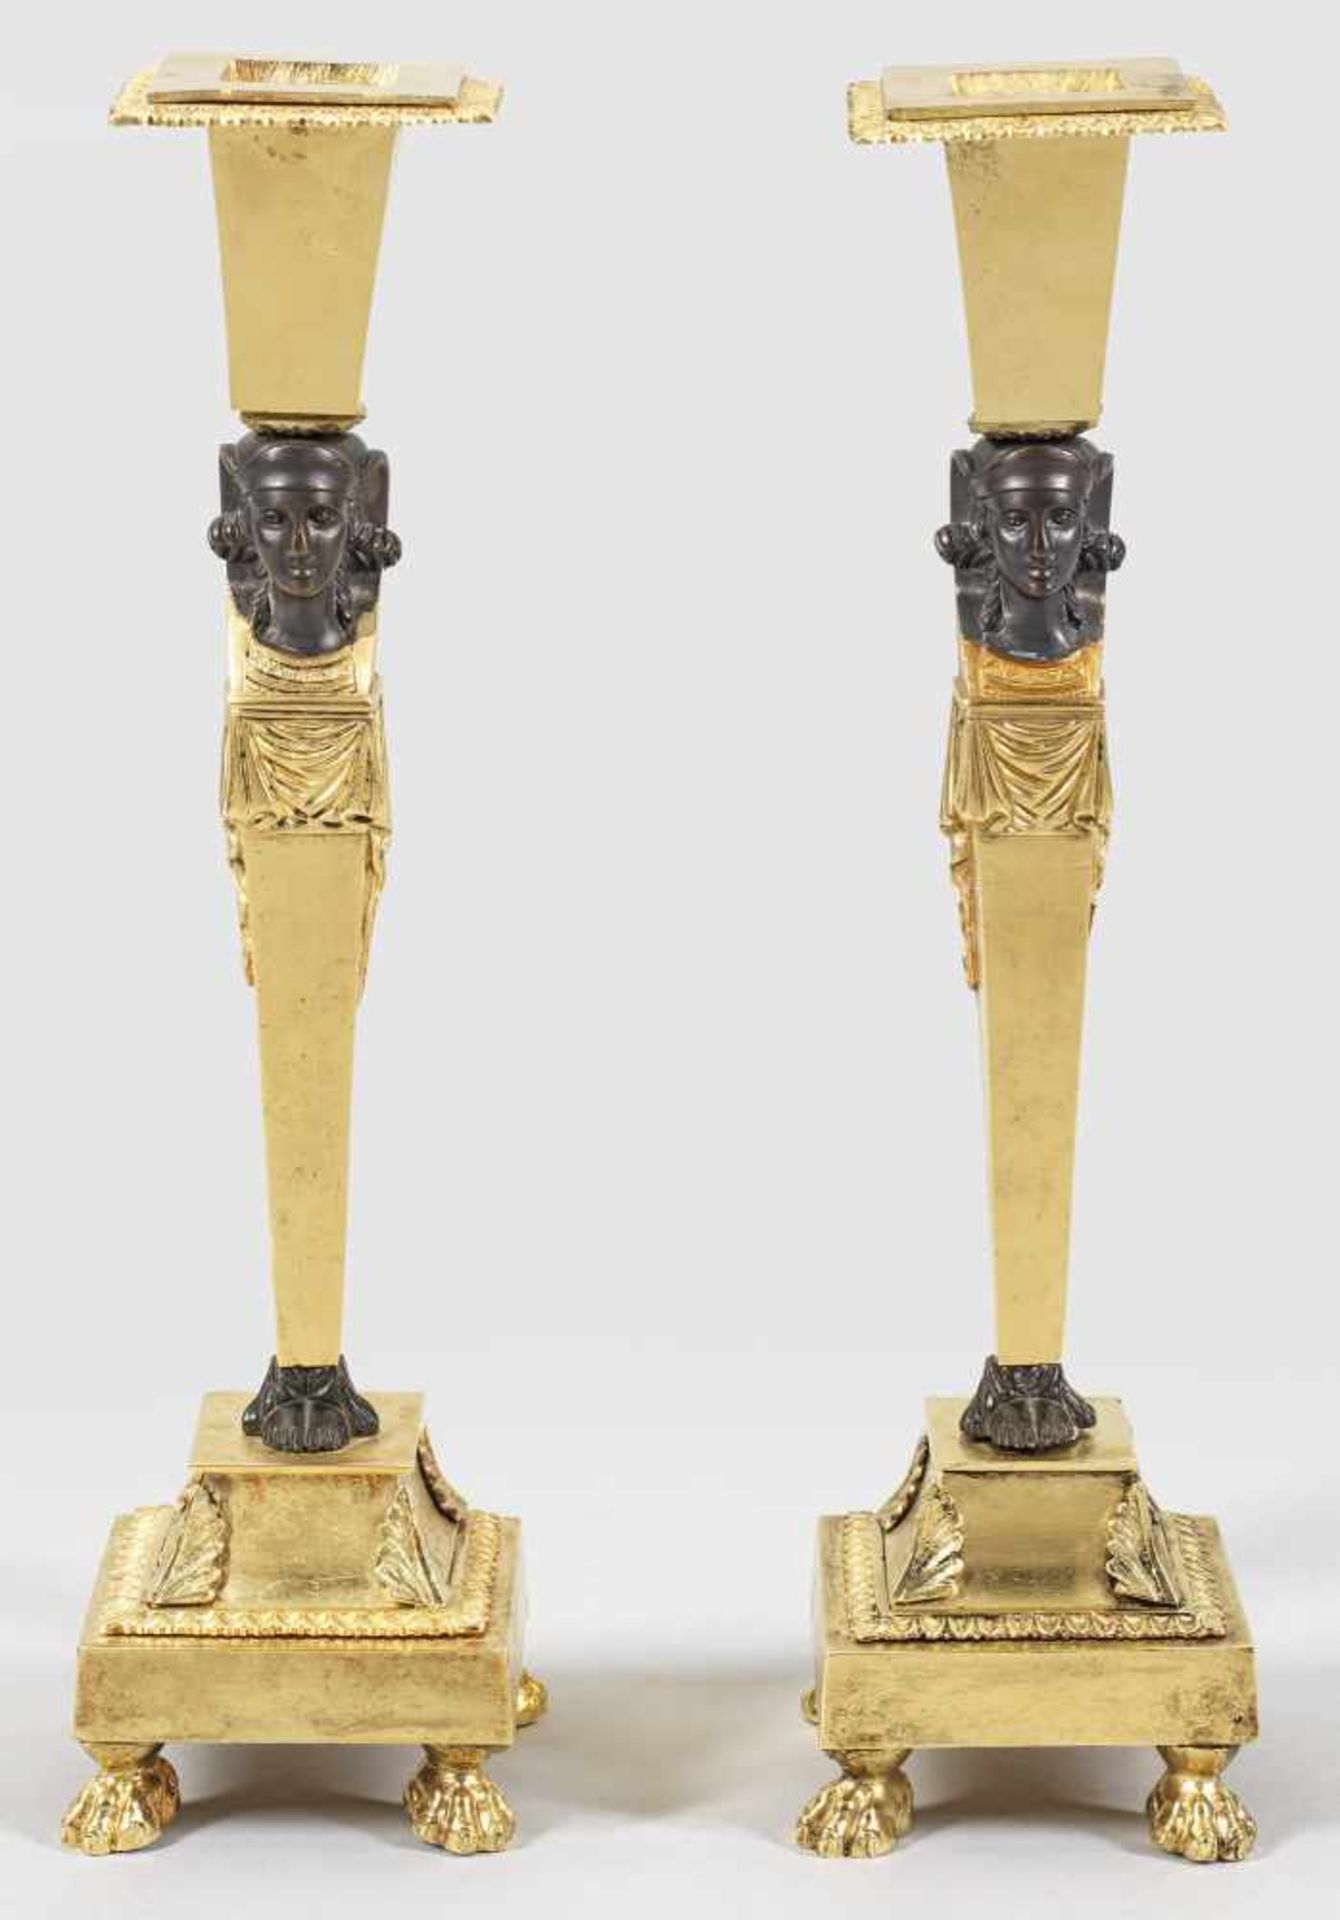 Paar Empire-Figurenleuchter1-flg.; Bronze, vergoldet bzw. teilw. dunkel patiniert. Konisch